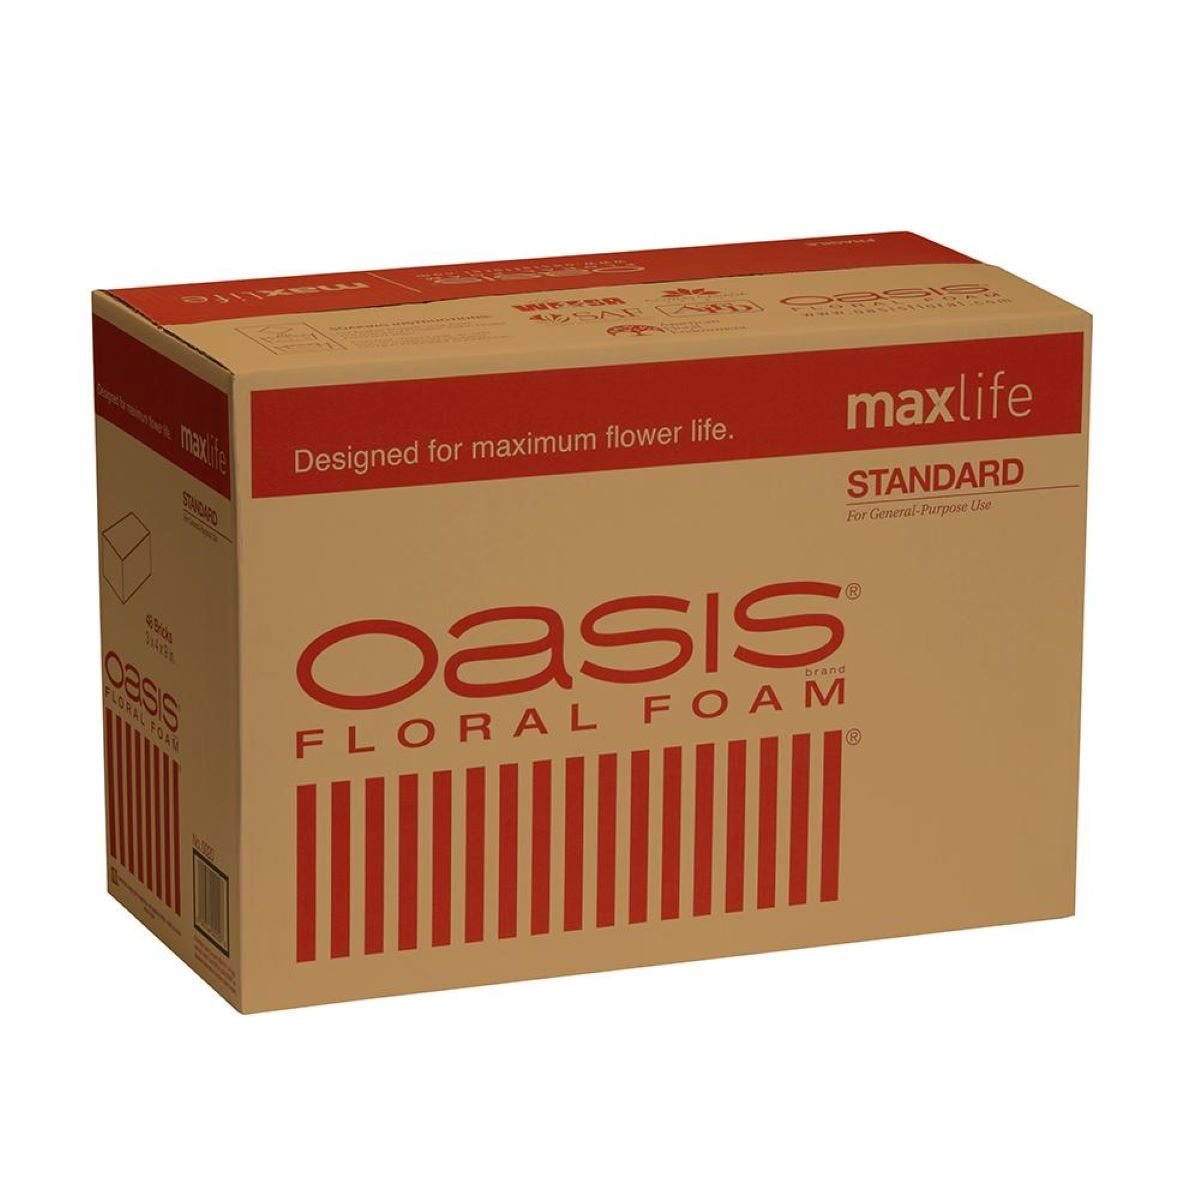 Oasis Standard Floral Foam Maxlife, Case of 48 at